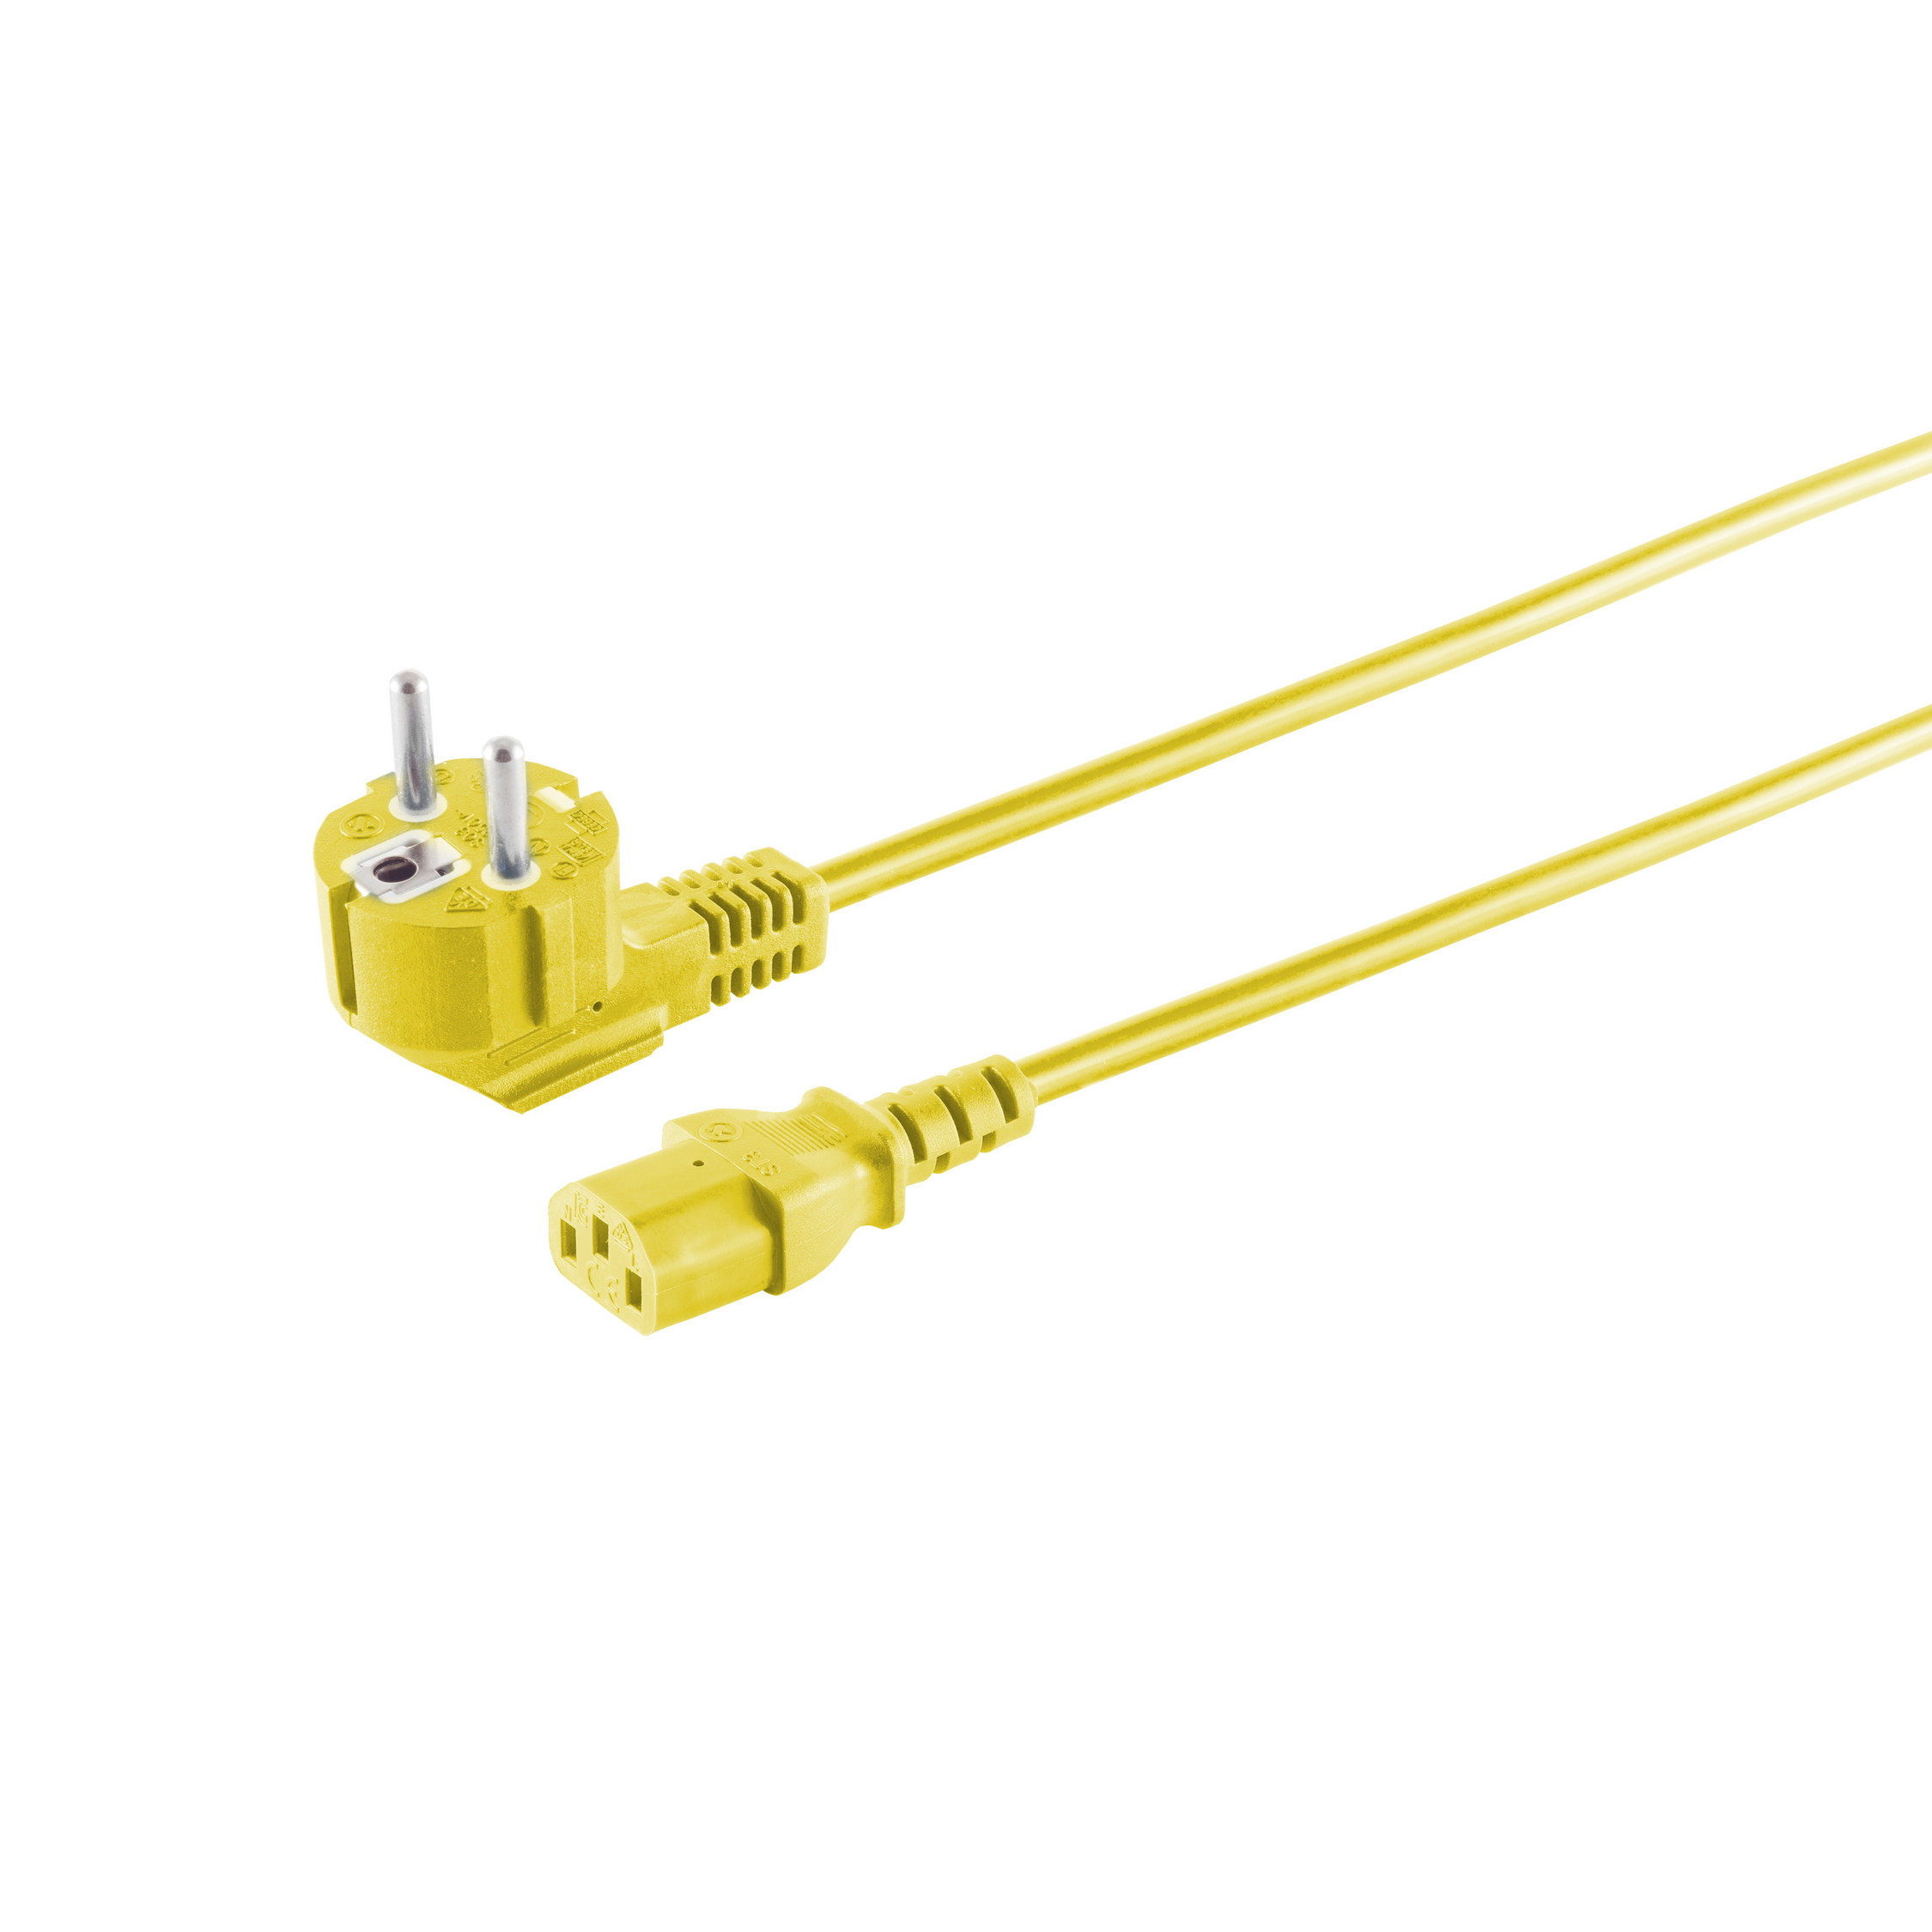 S/CONN MAXIMUM CONNECTIVITY Schutzkontakt 90°/Kaltgerätebuchse Netzanschlusskabel gelb 5m